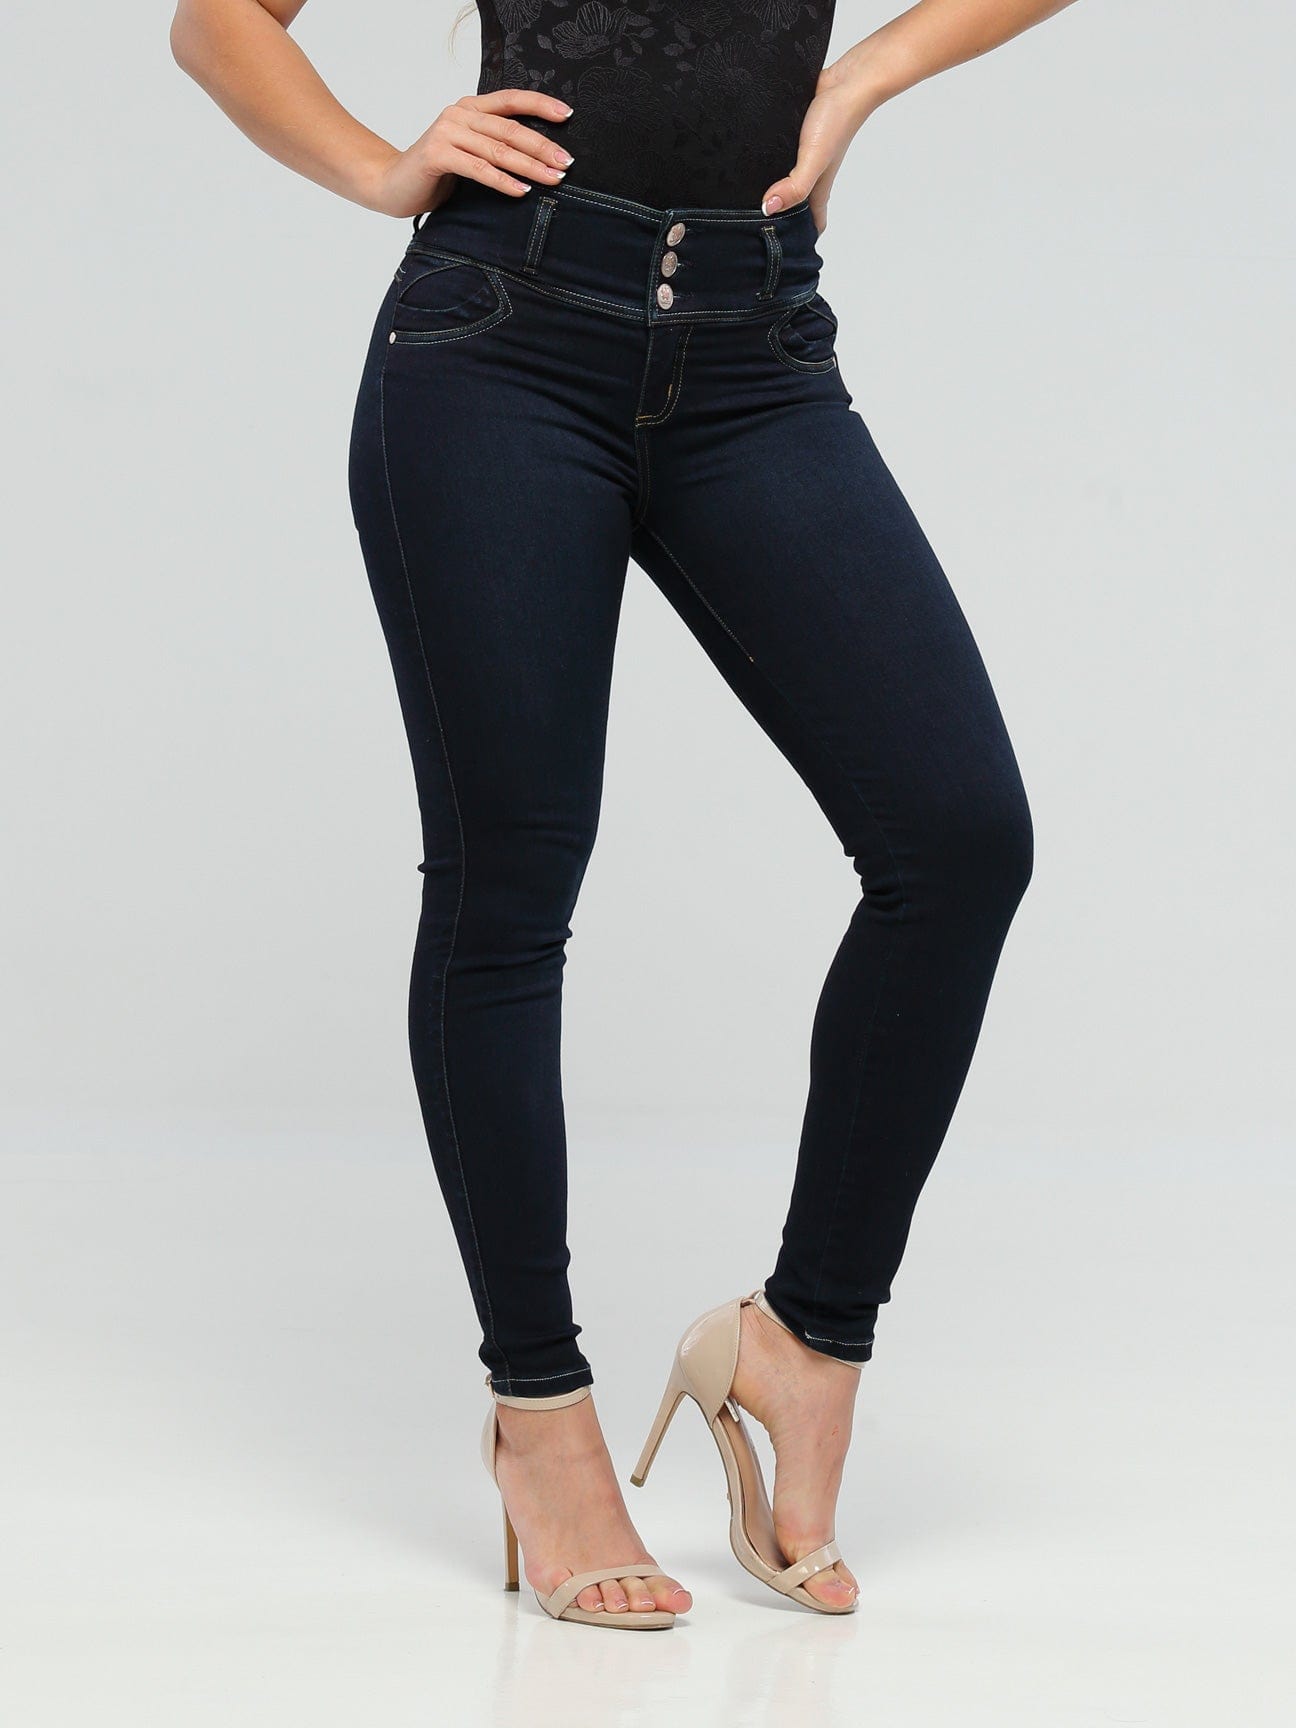 High waist, dark blue, skinny jeans worn by a model in heels